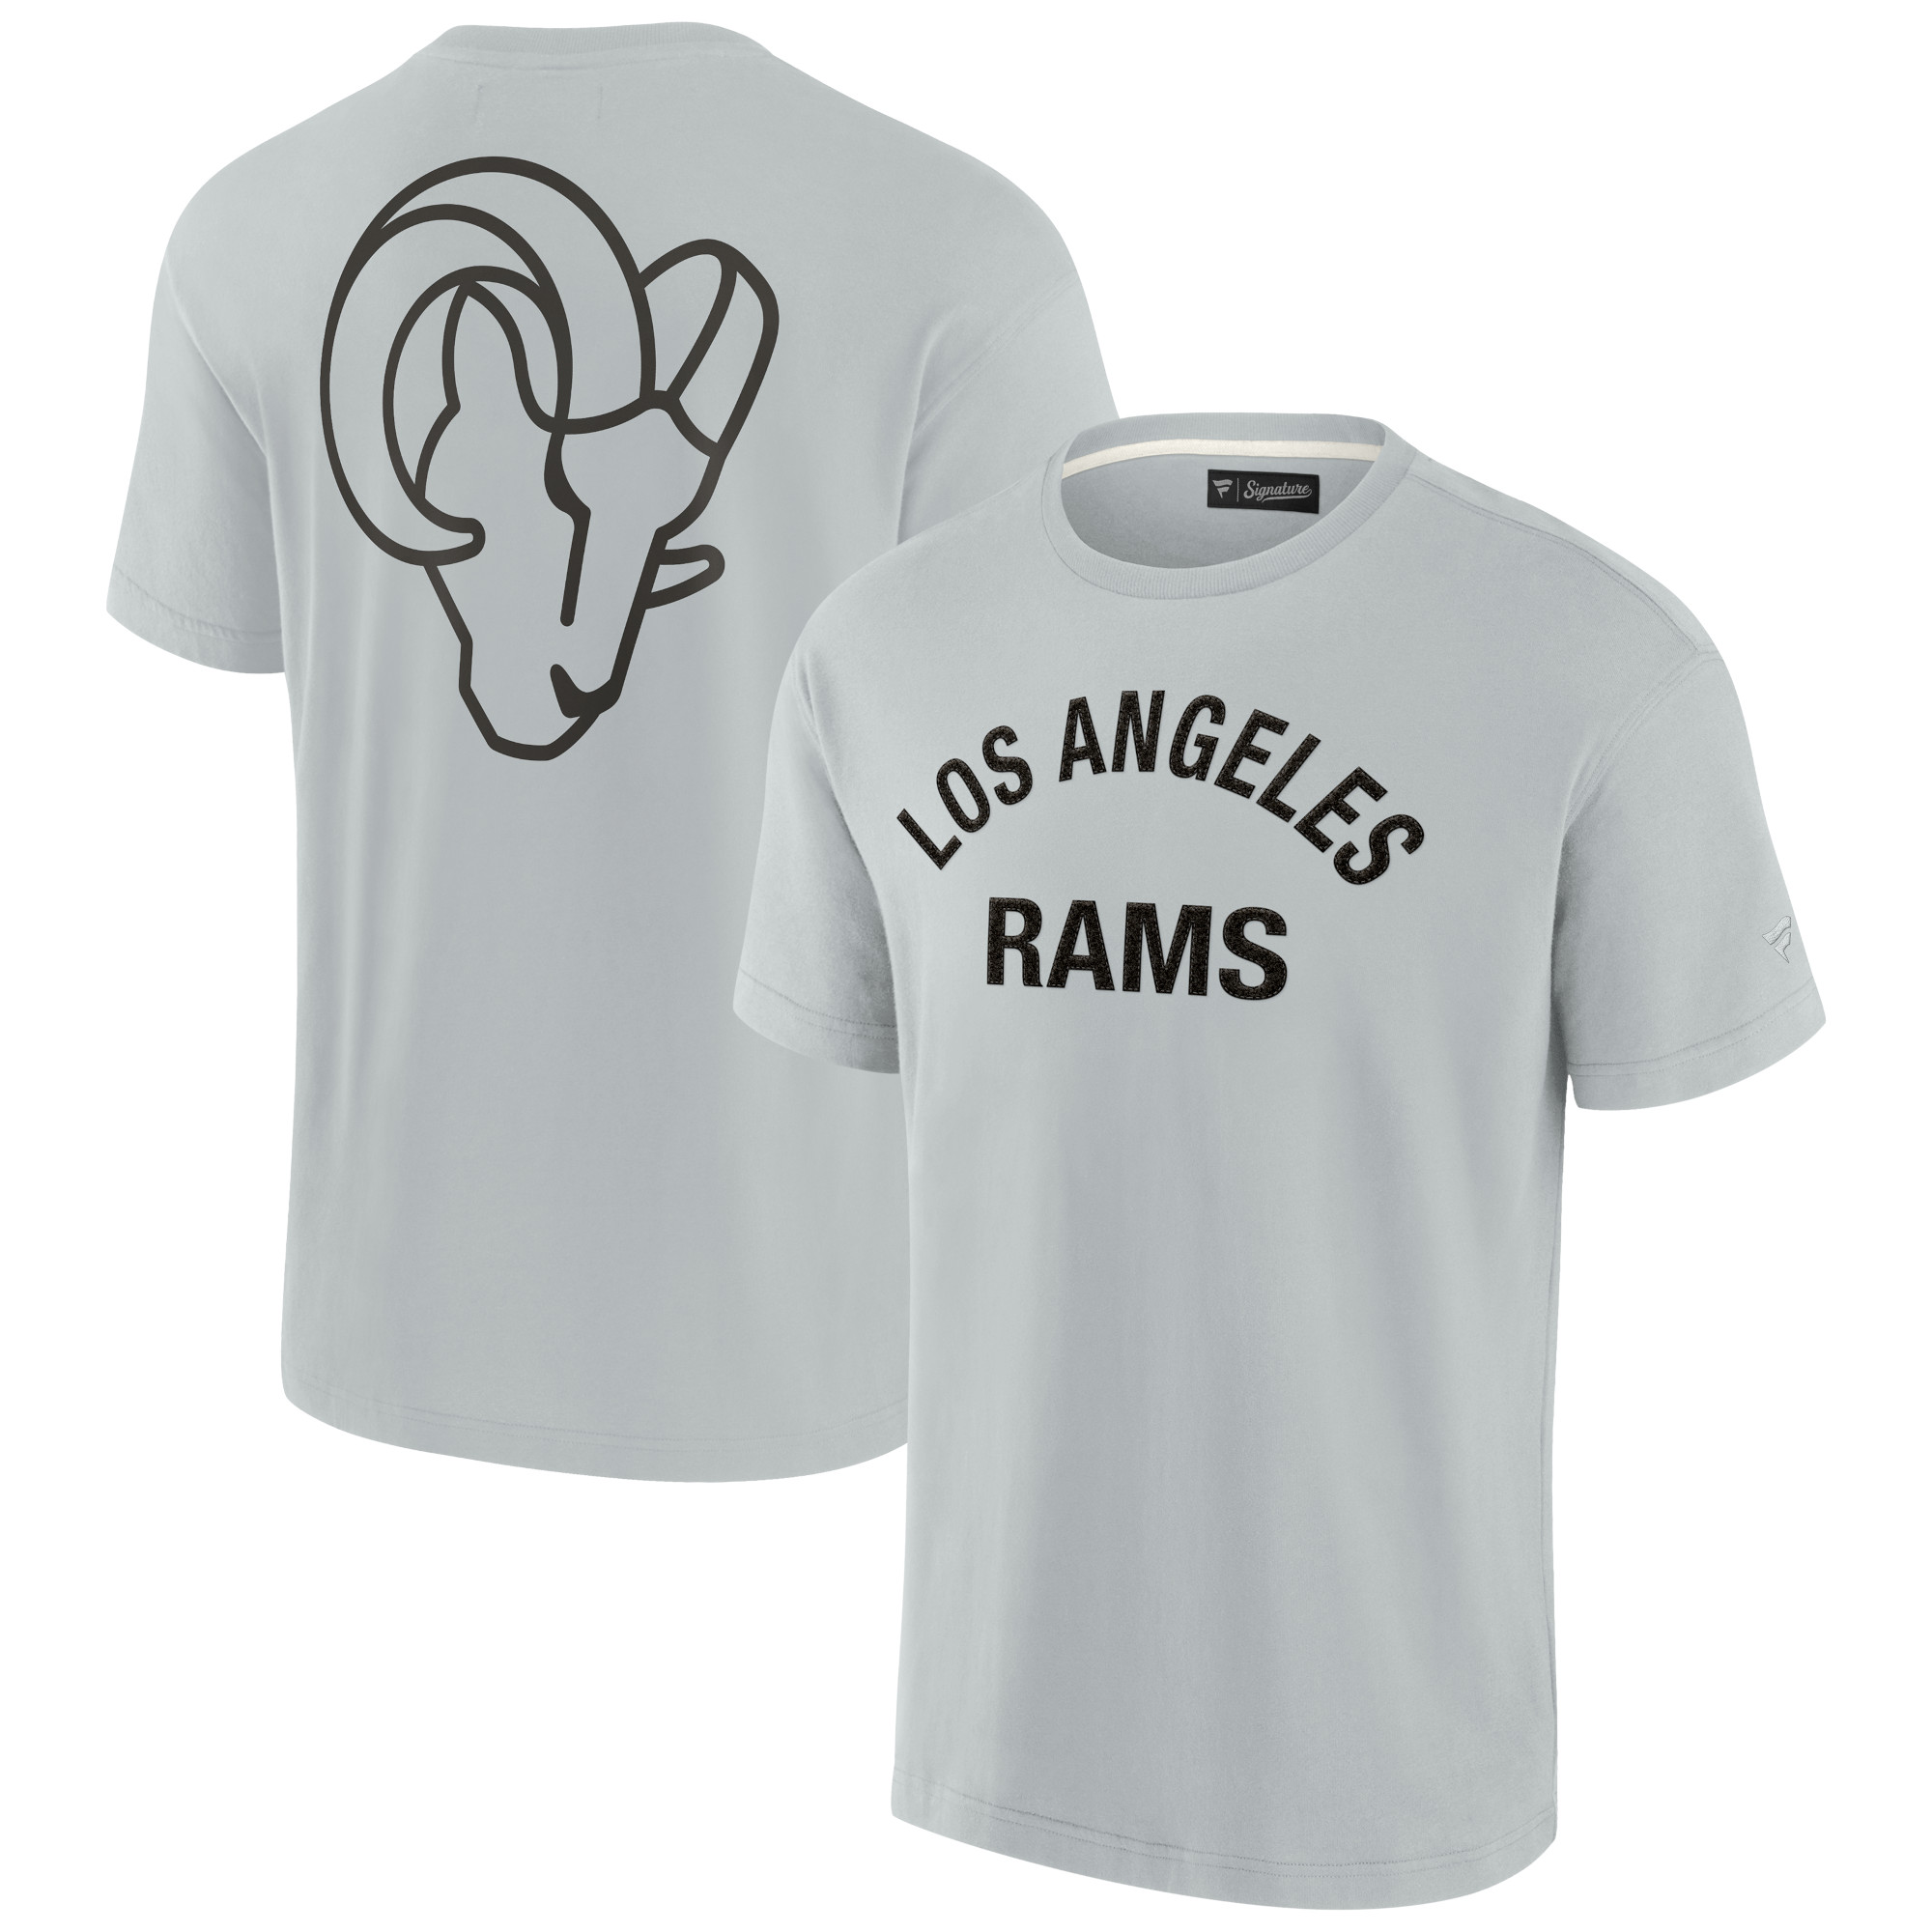 Unisex Fanatics Graues Los Angeles Rams Elements Superweiches Kurzarm-T-Shirt